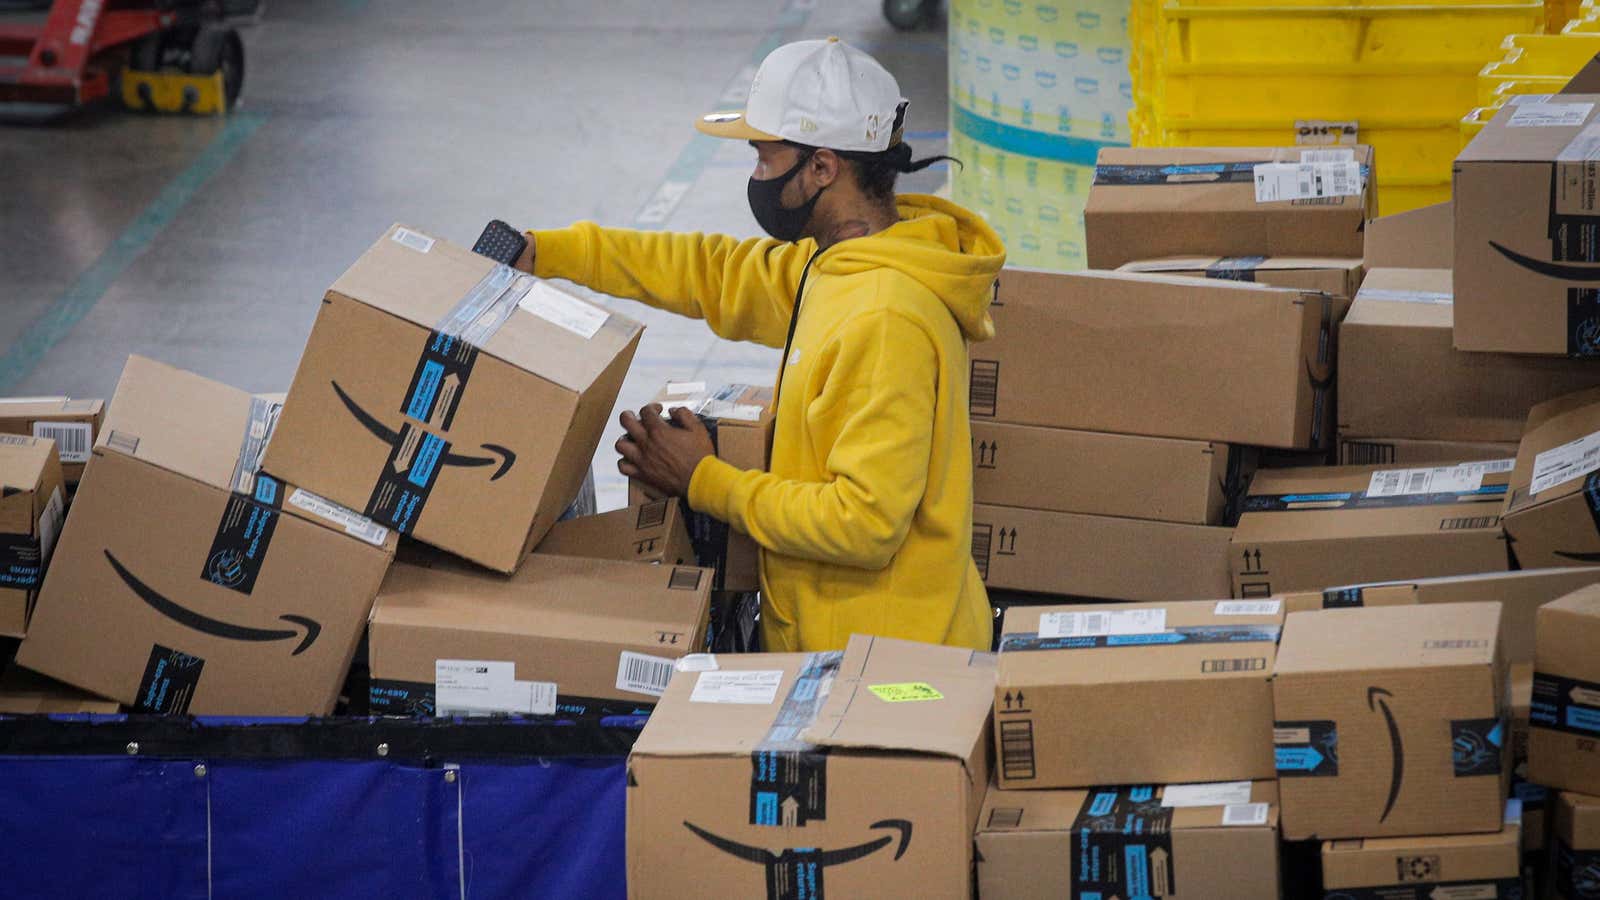 Amazon now has 1.2 million employees around the world.